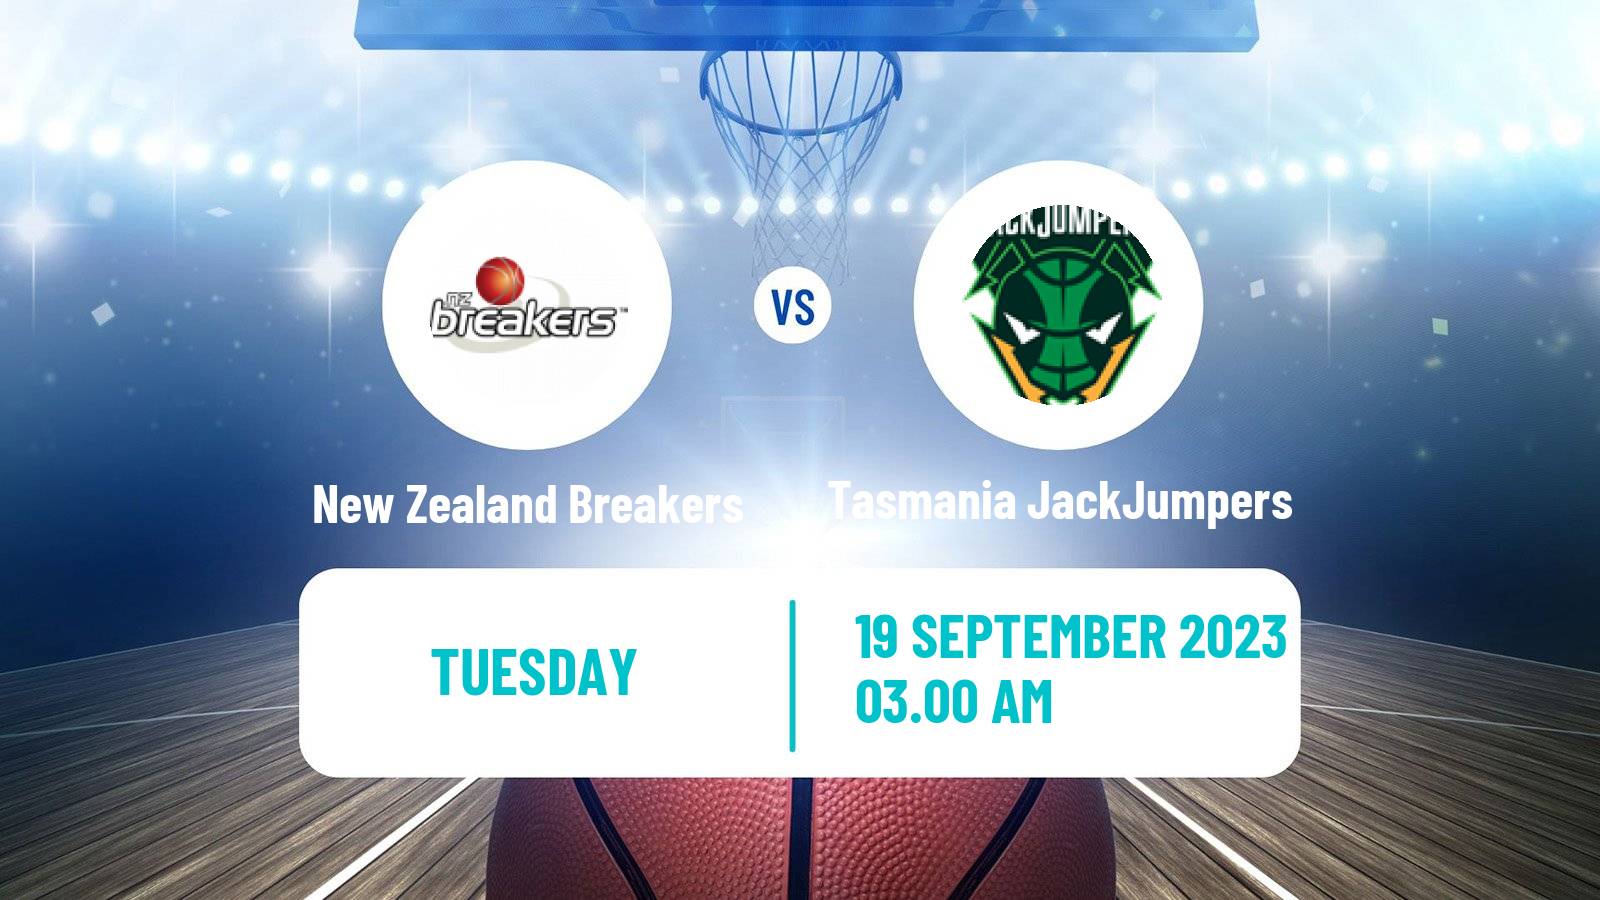 Basketball Club Friendly Basketball New Zealand Breakers - Tasmania JackJumpers